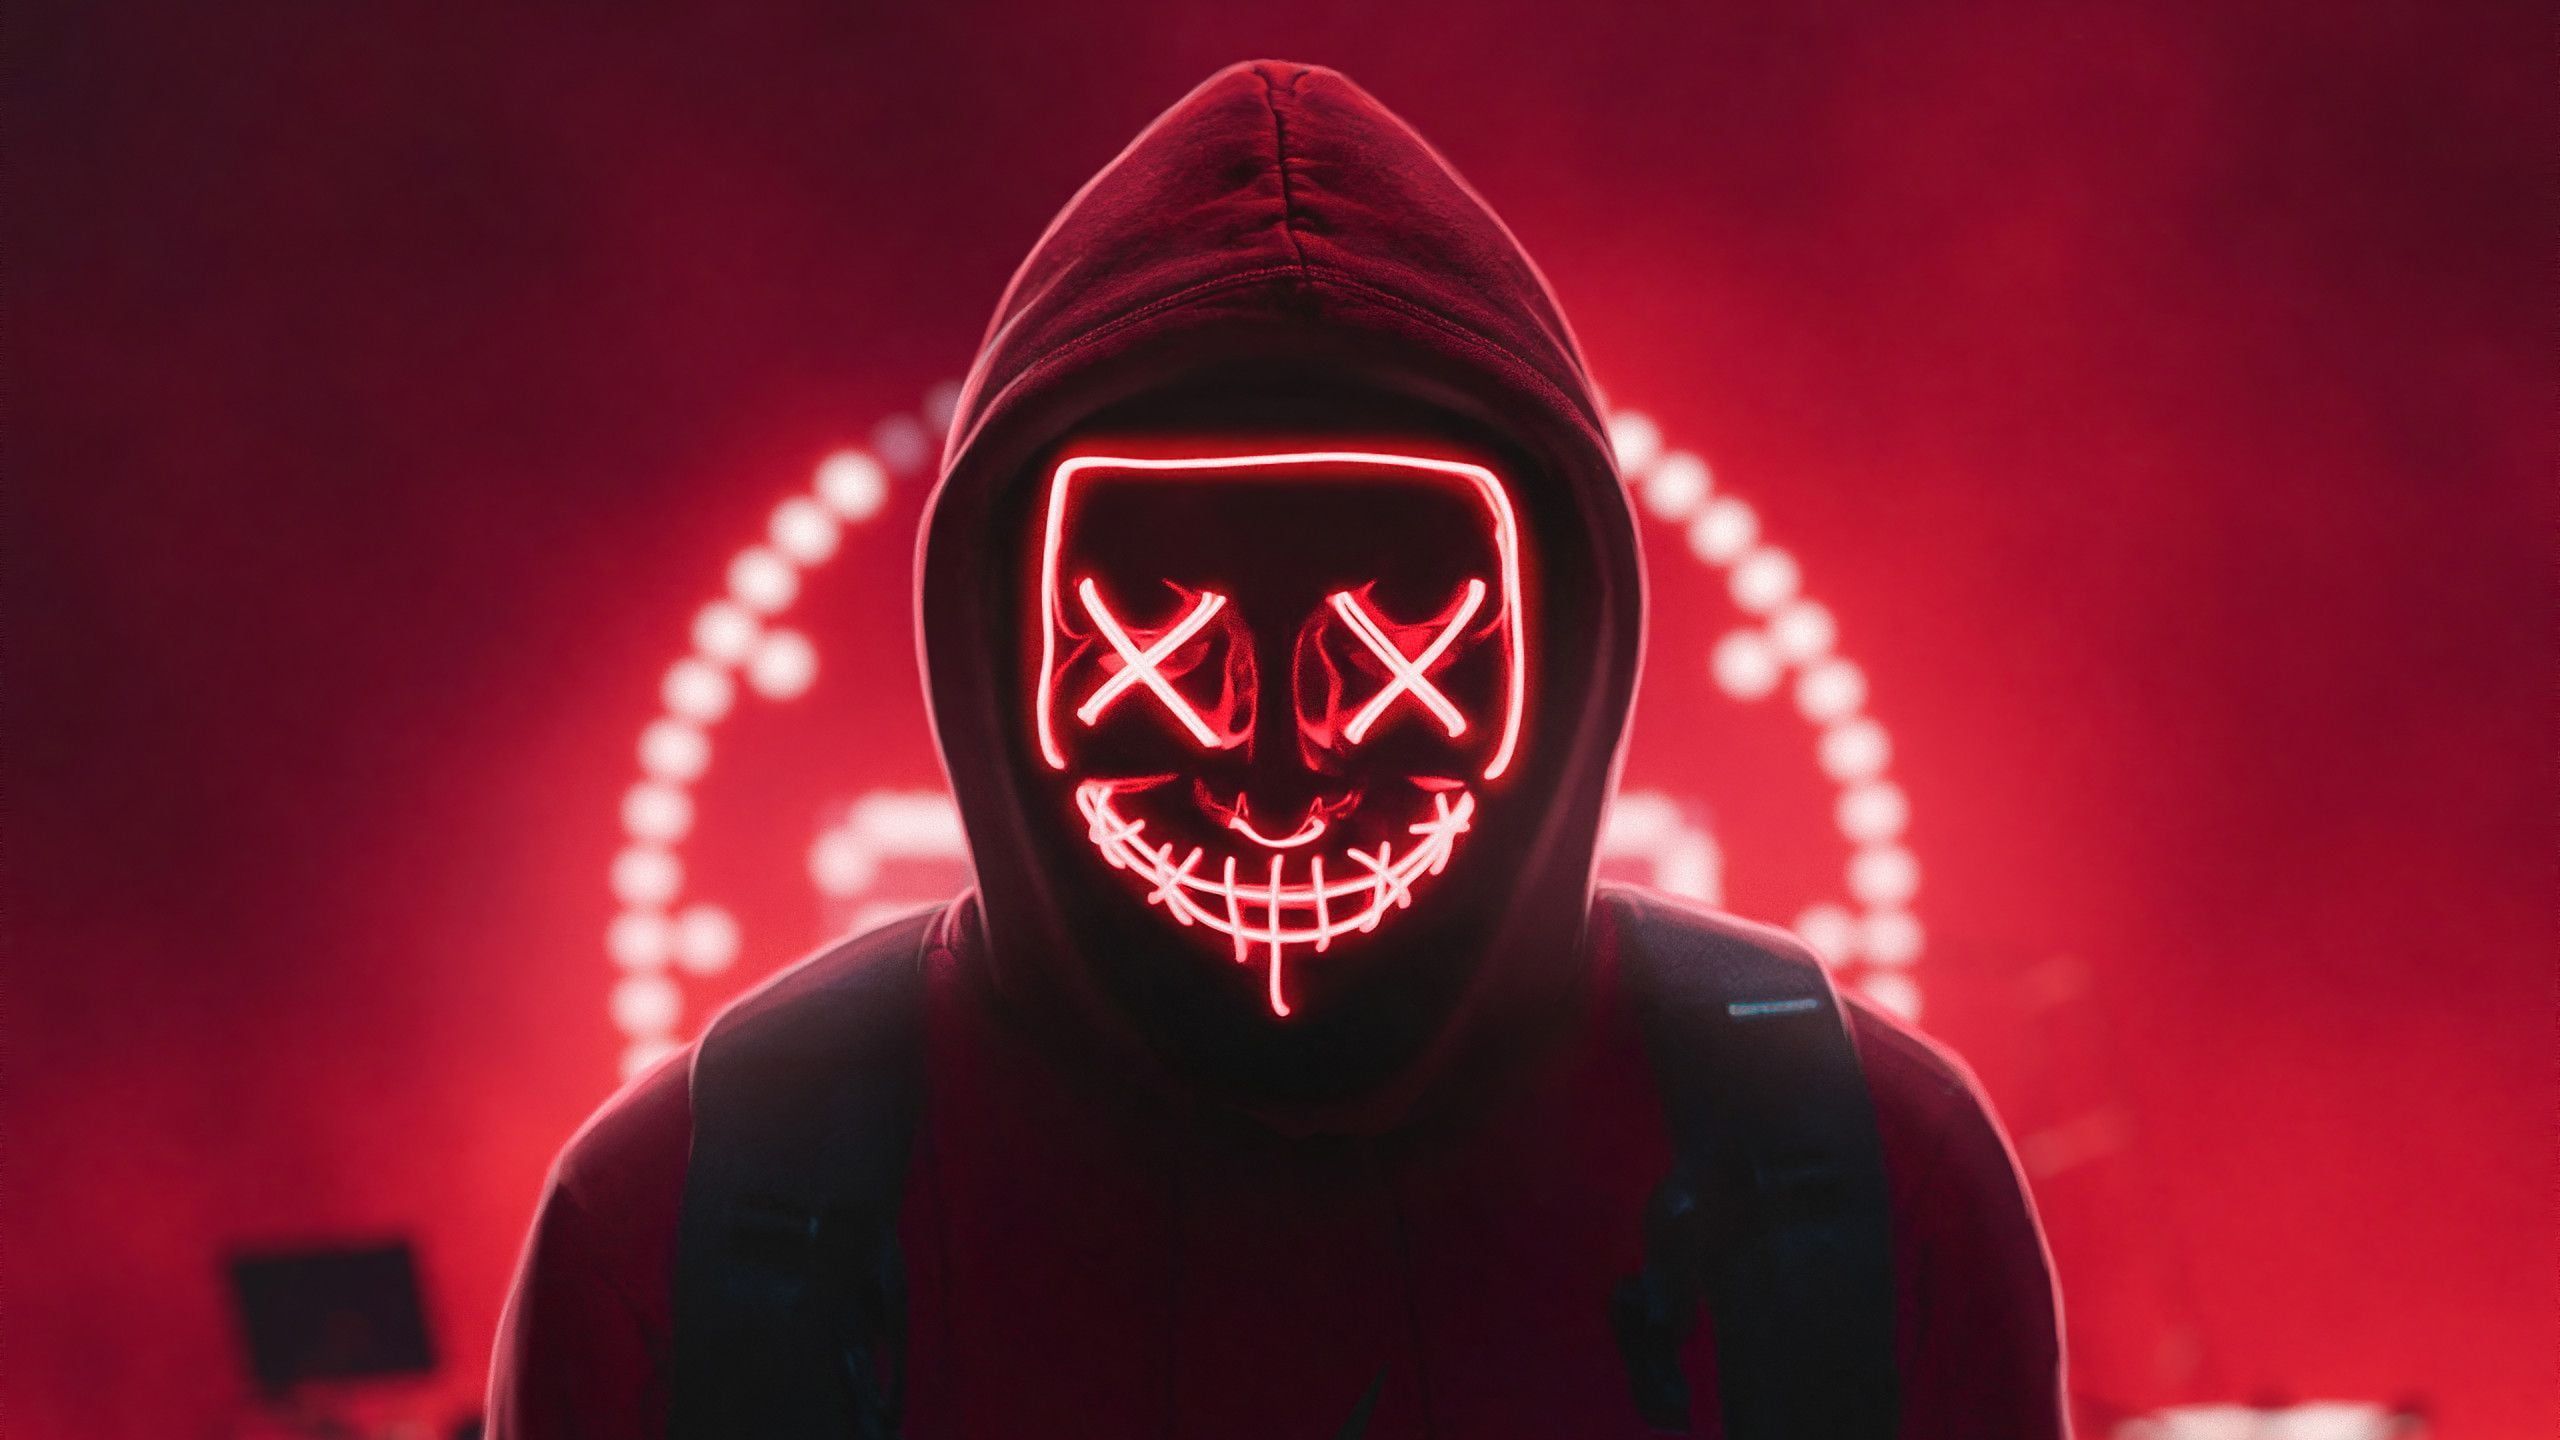 Red Neon Mask digital art #LEDs #red #neon #mask creepy eyes #creepy #Photoshop #lights #faceless #hoods #artwork #photomo. Creepy eyes, Marvel wallpaper hd, Neon